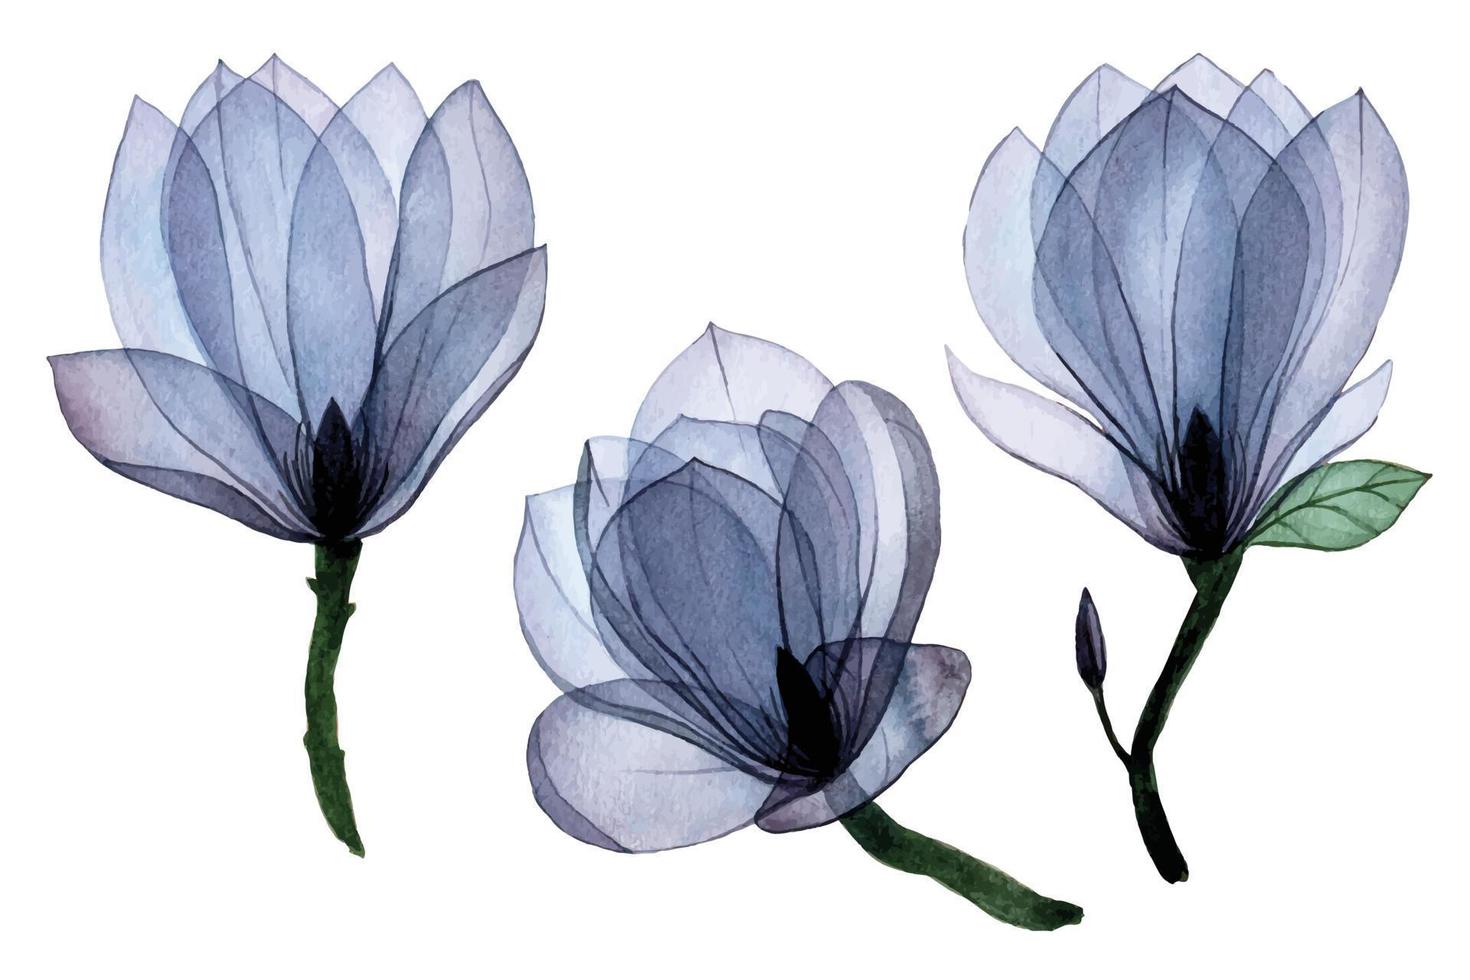 juego de dibujo de acuarela con flores de magnolia transparente. flores transparentes elementos aislados azules. vector